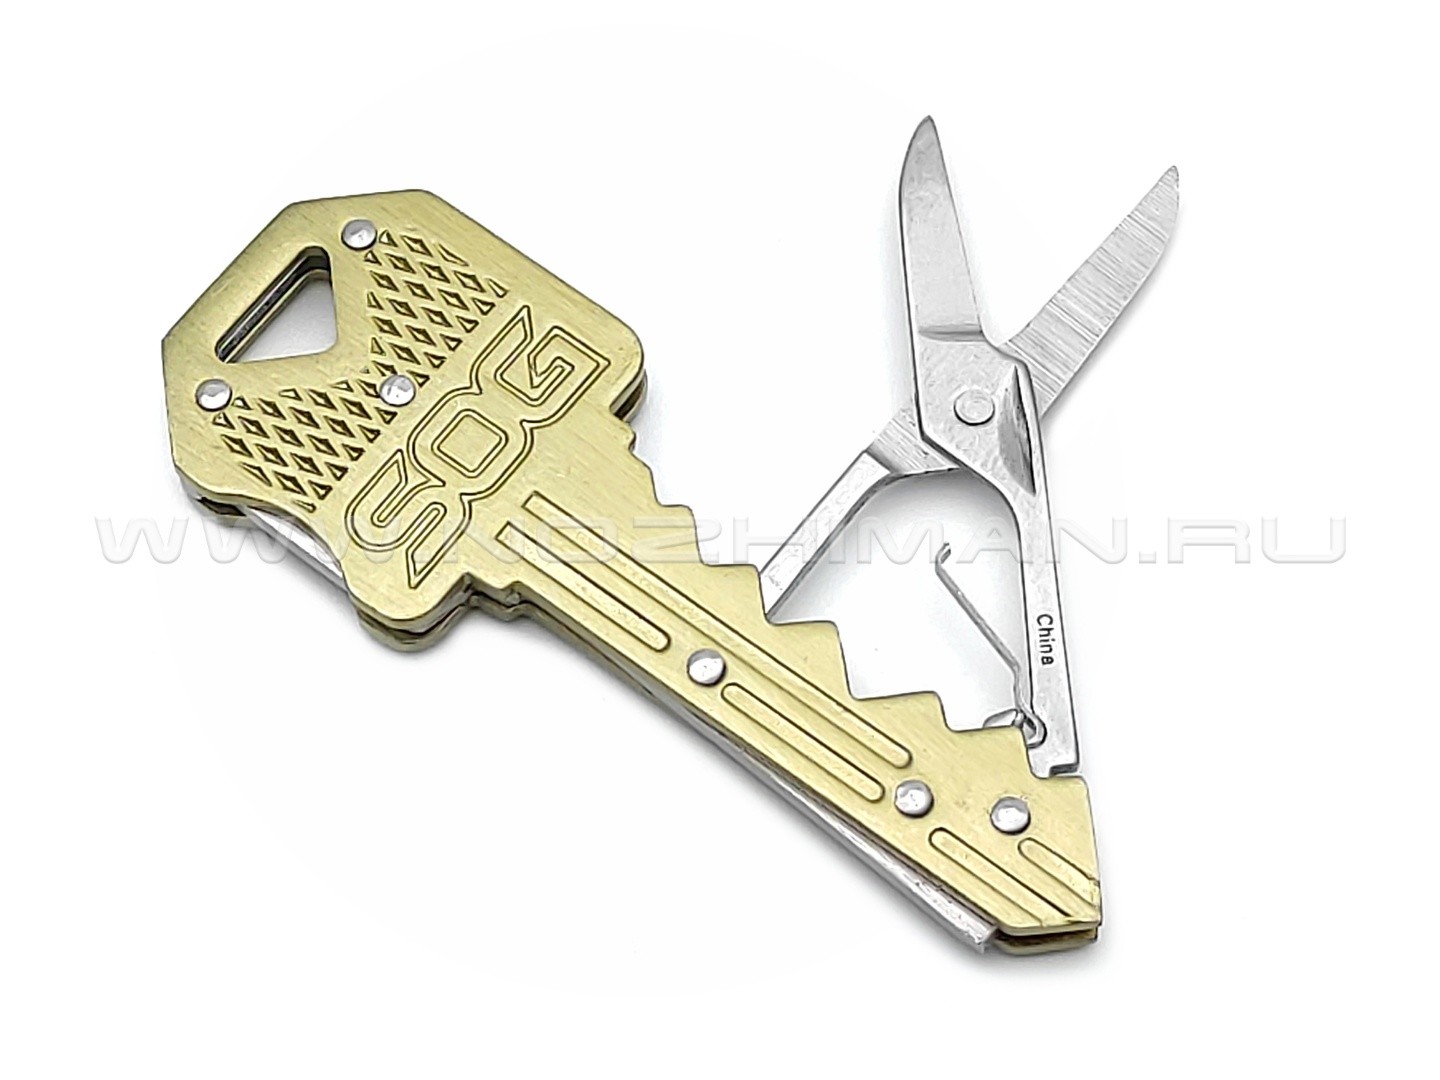 Ножницы брелок SOG Key Scissors KEY202 stainless steel